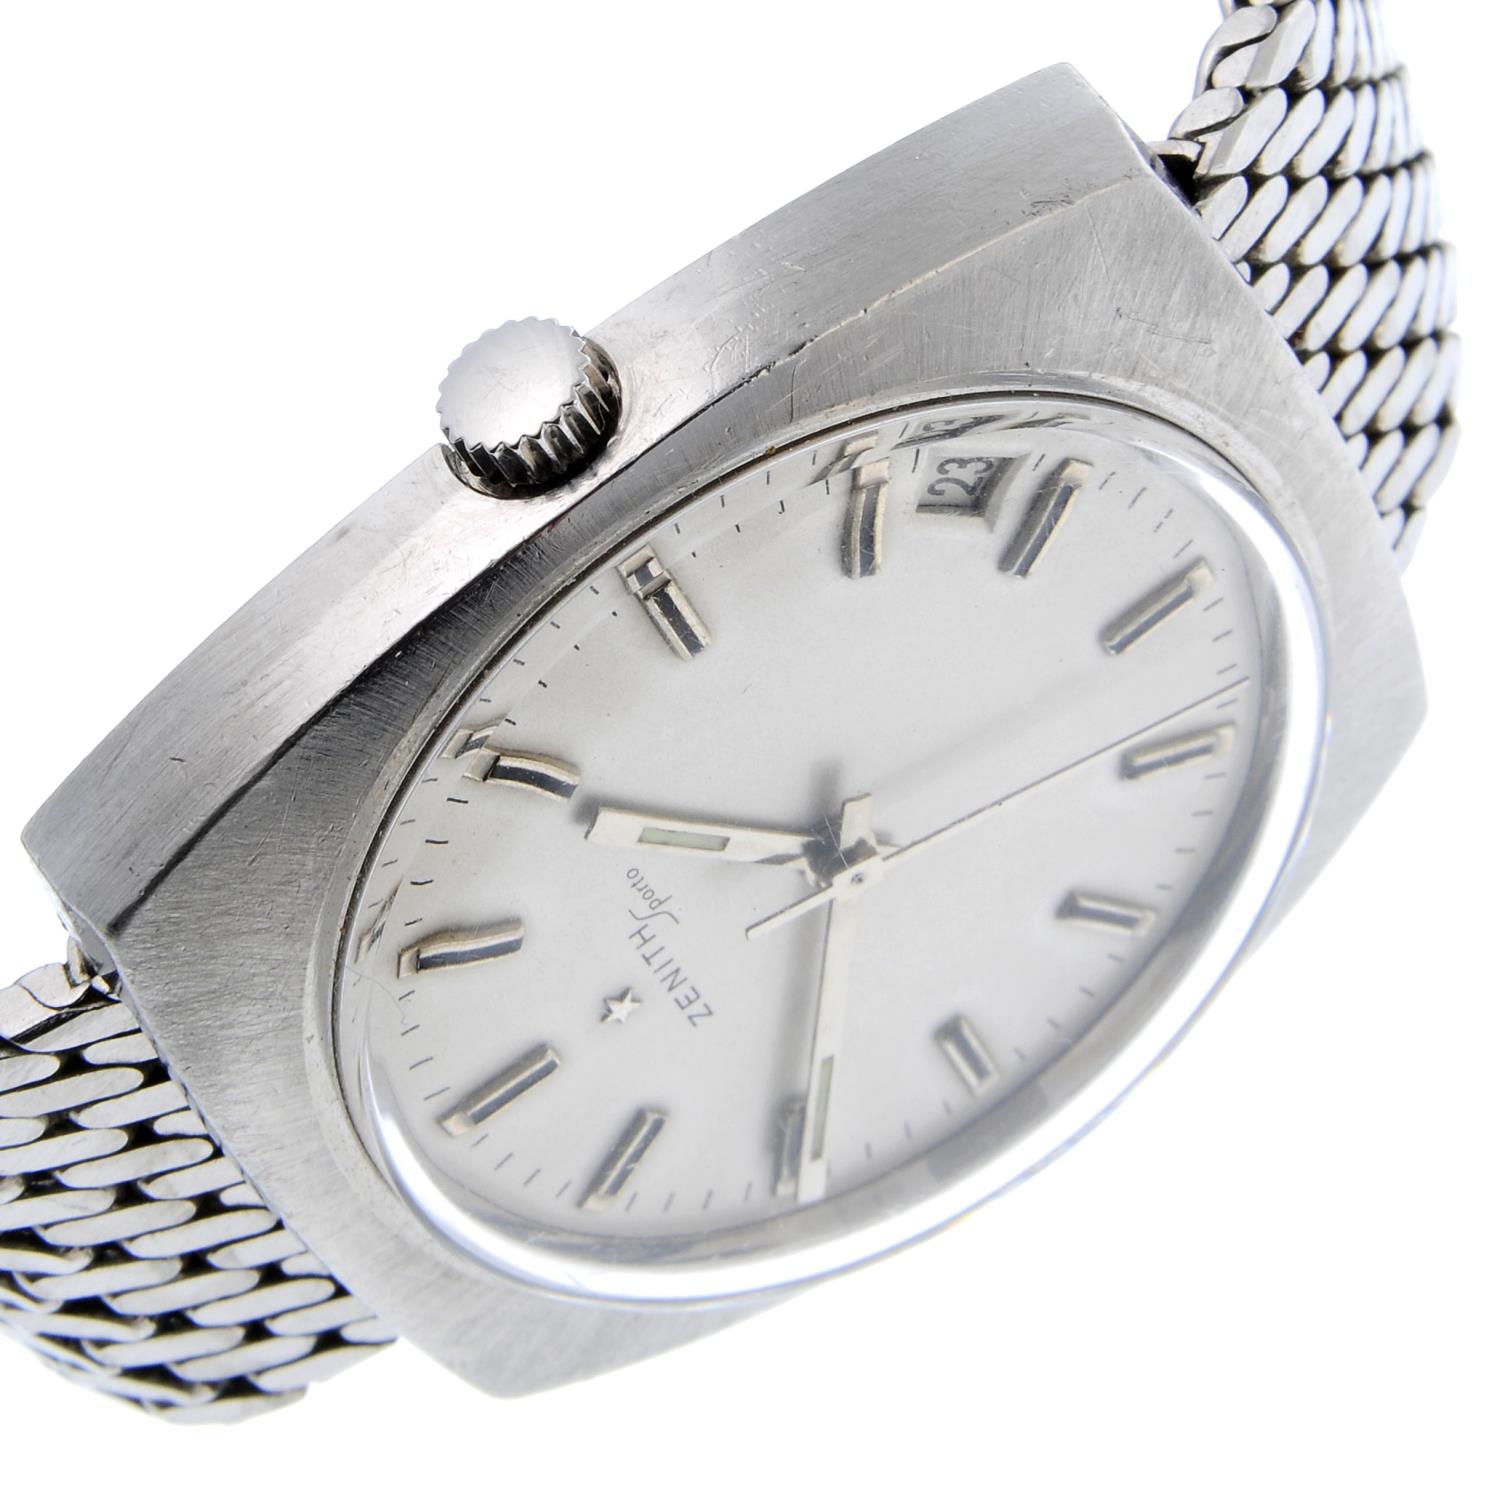 ZENITH - a gentleman's Sporto bracelet watch. - Image 3 of 4